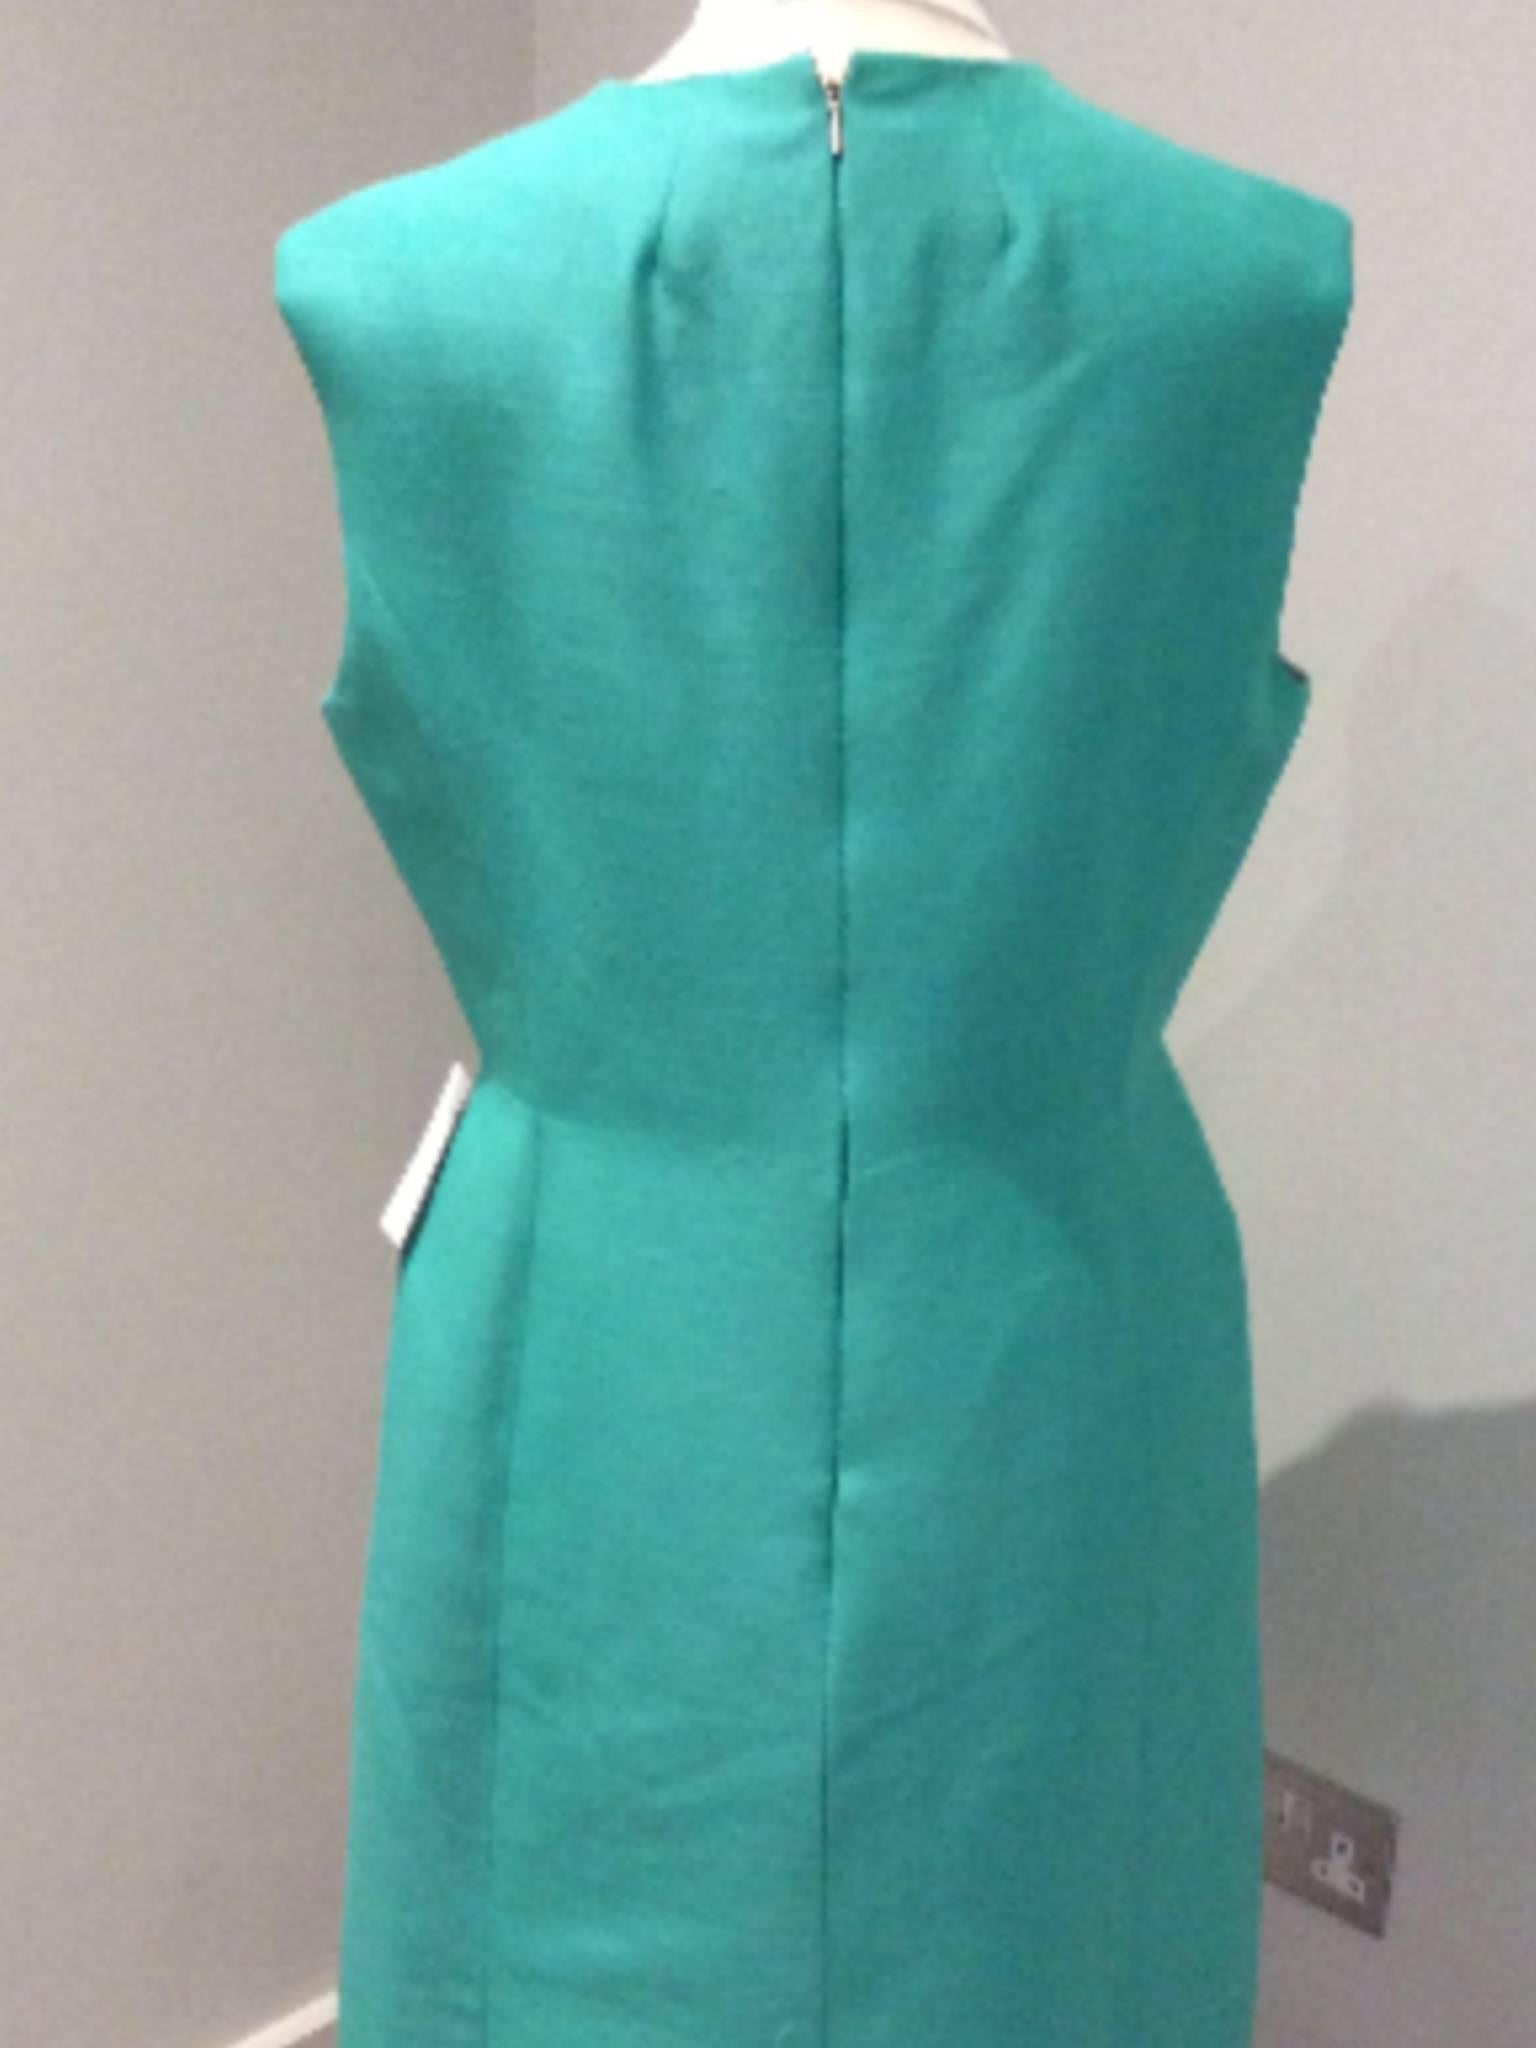 Vintage 1960’s Petite Francaise shift dress and jacket 
Measurements- dress, bust 100cm, waist 84cm, length (centre back) 98cm
Jacket - bust 104cm, waist90cm, length 39cm 
This is an approximate UK size 14
